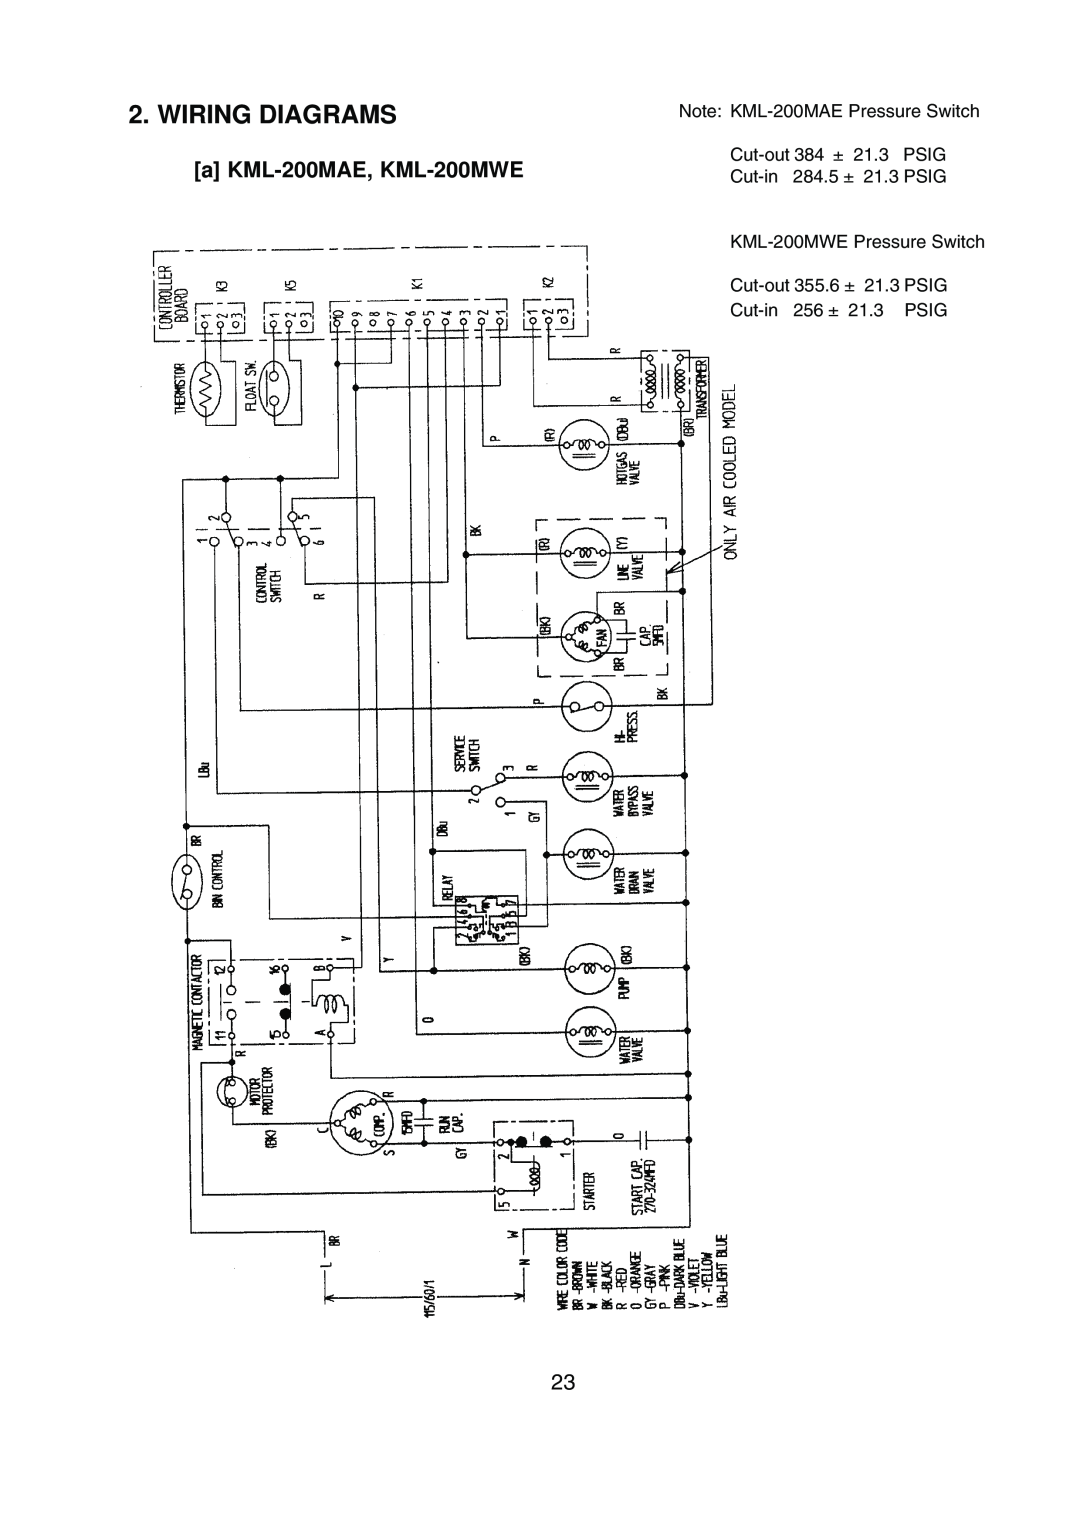 Hoshizaki service manual Wiring Diagrams, aKML-200MAE, KML-200MWE 